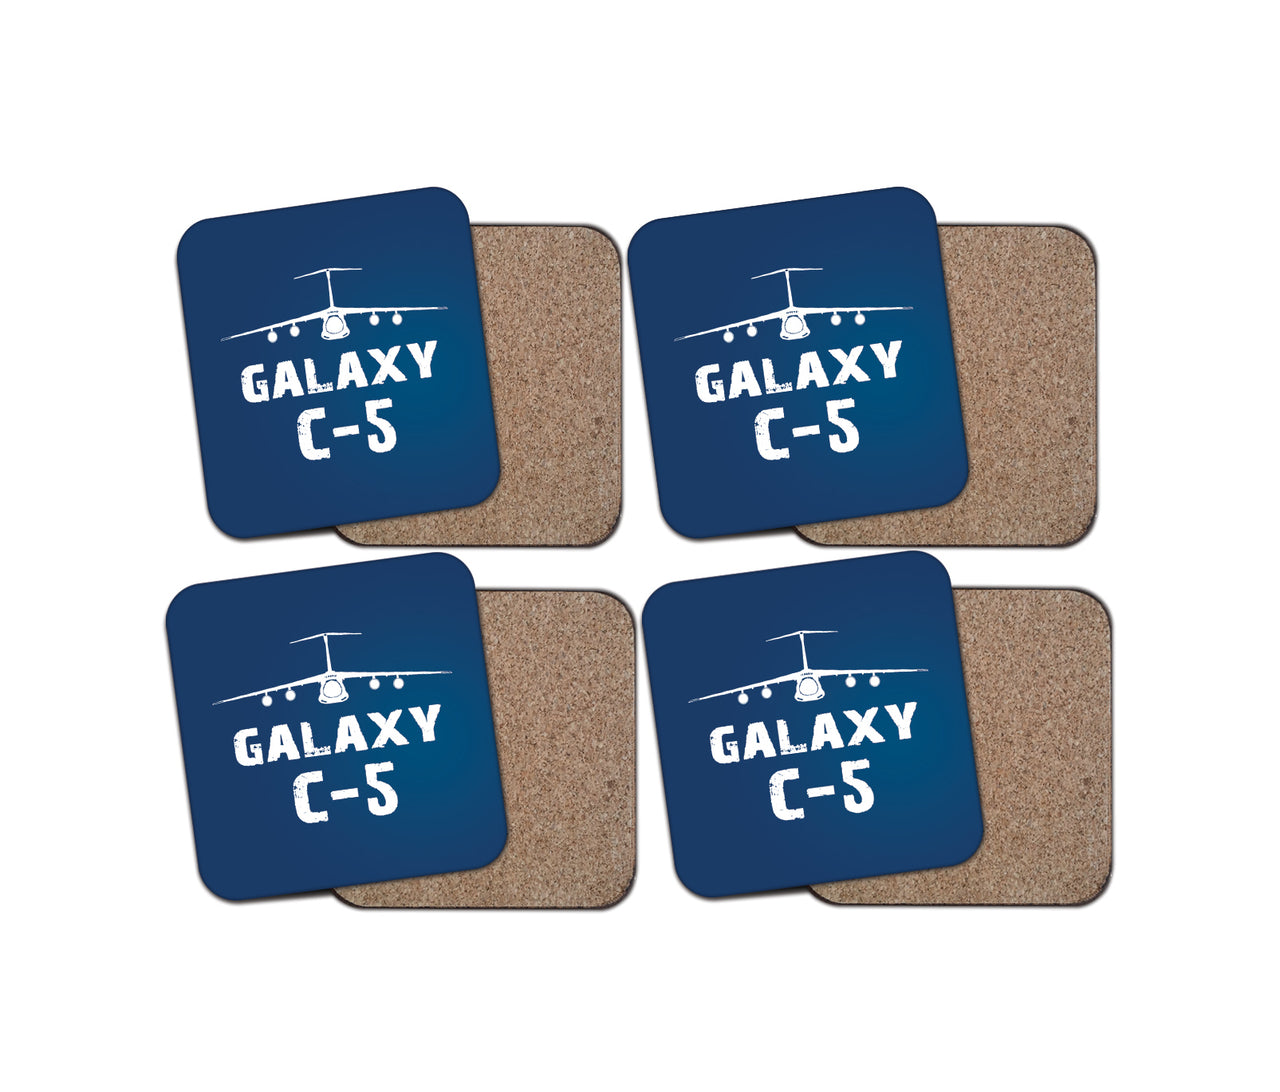 Galaxy C-5 & Plane Designed Coasters